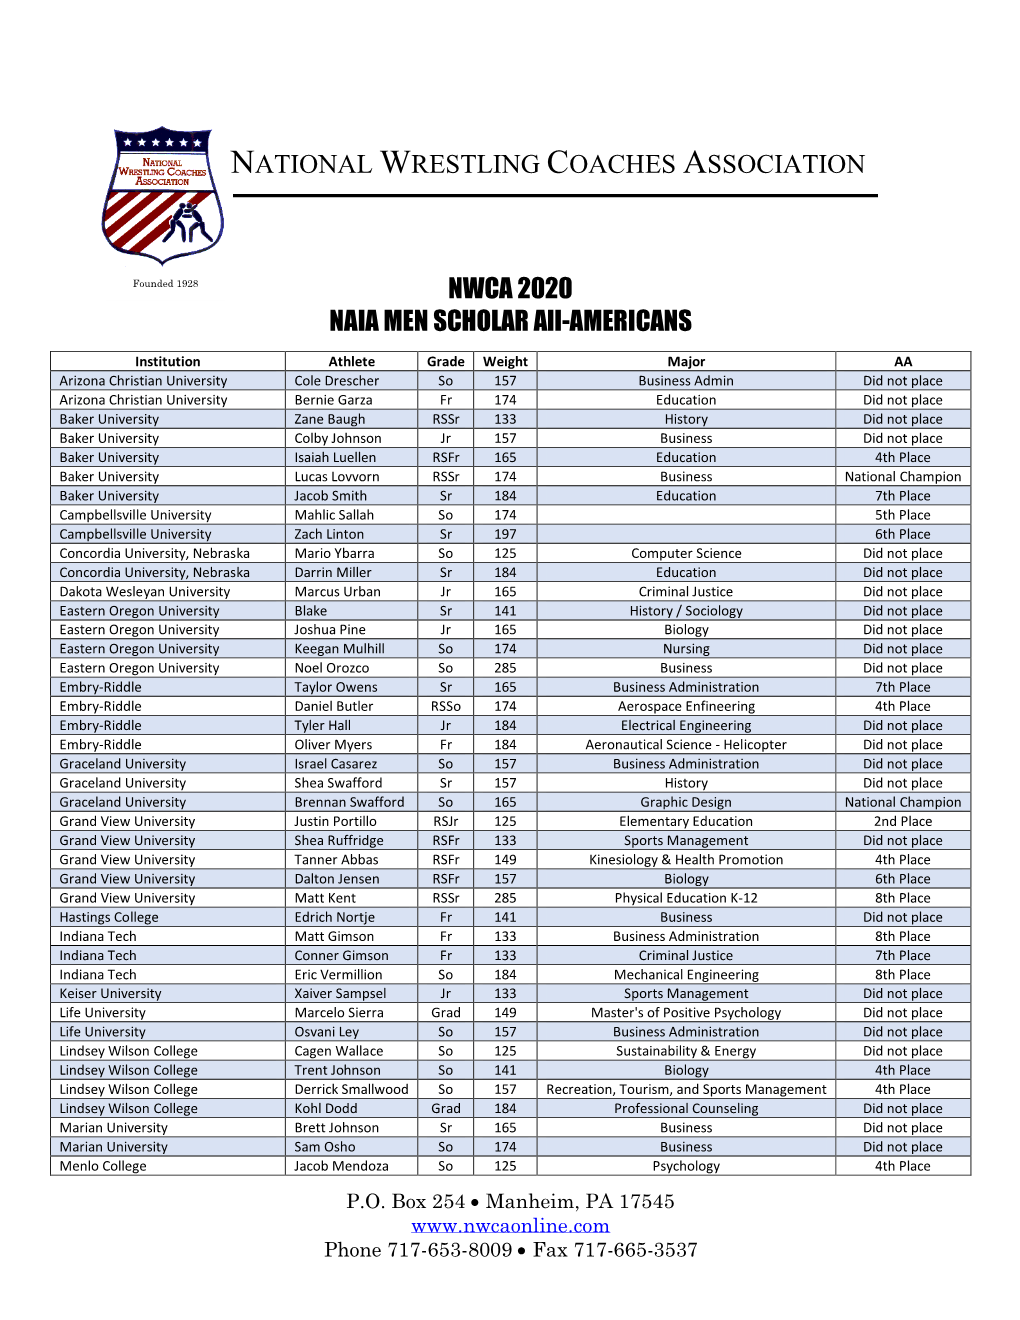 NWCA 2020 NAIA MEN SCHOLAR All-AMERICANS NATIONAL WRESTLING COACHES ASSOCIATION